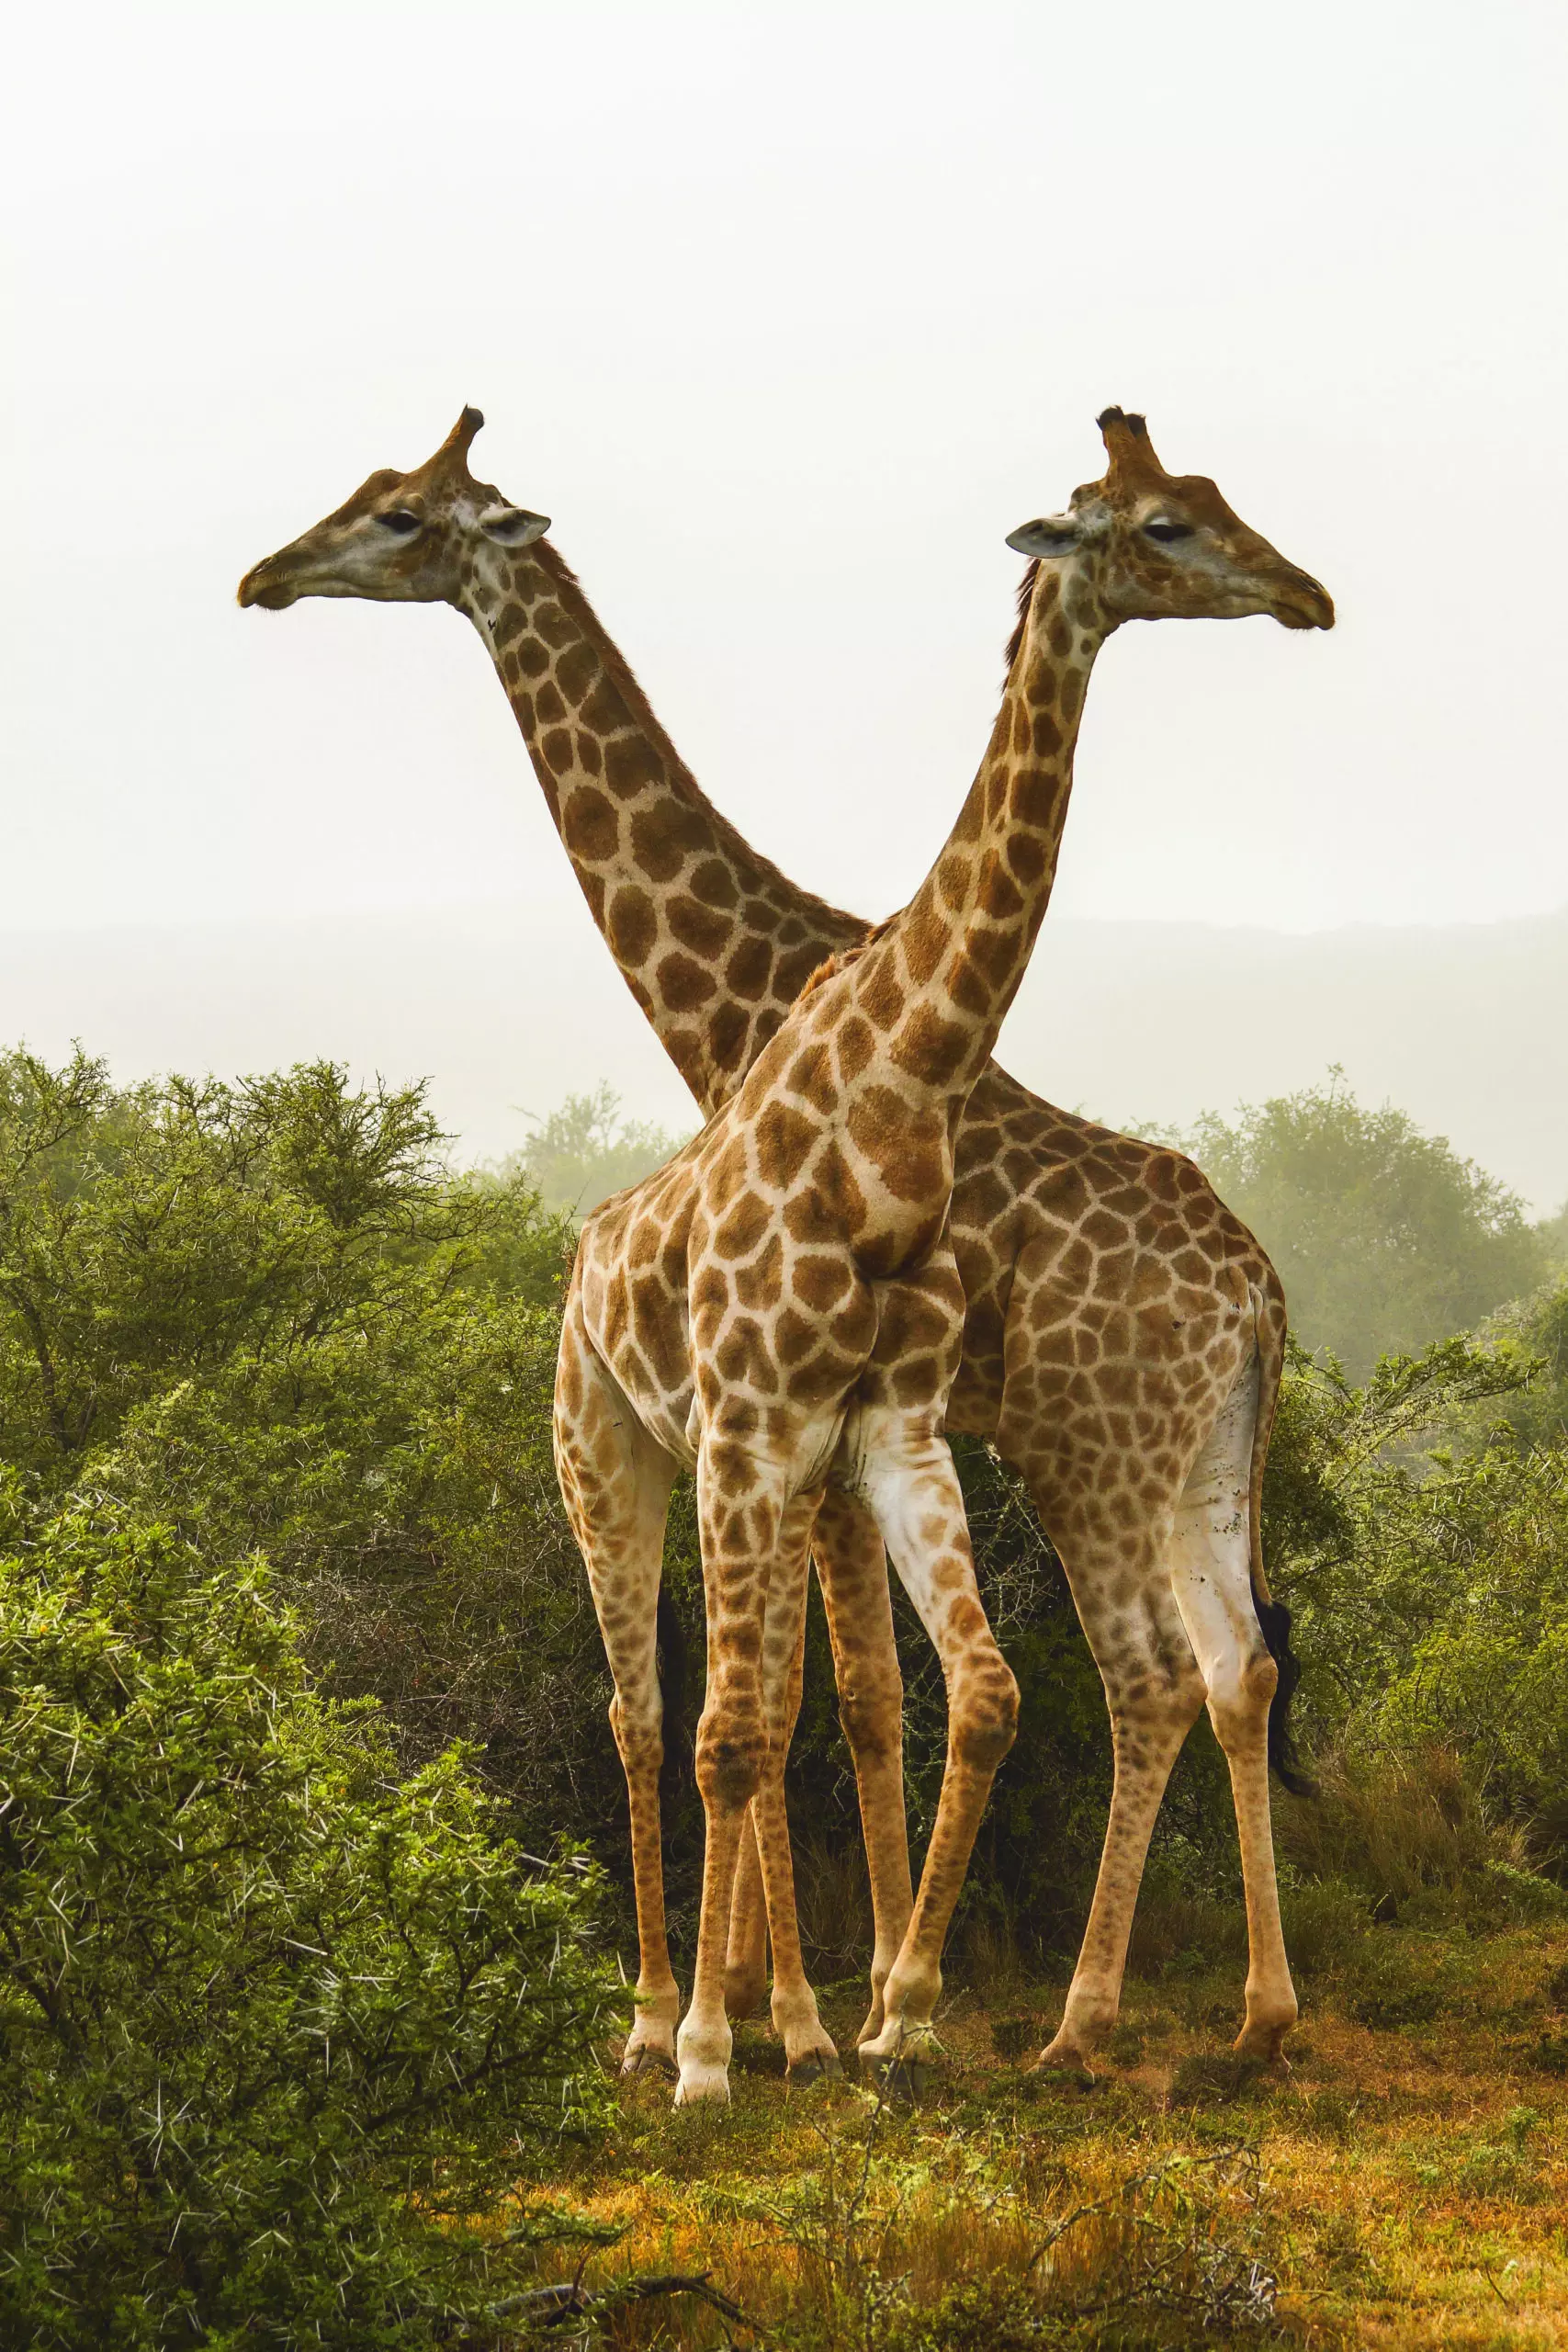 Wandbild (3450) Giraffen 2 präsentiert: Tiere,Wildtiere,Aus Afrika